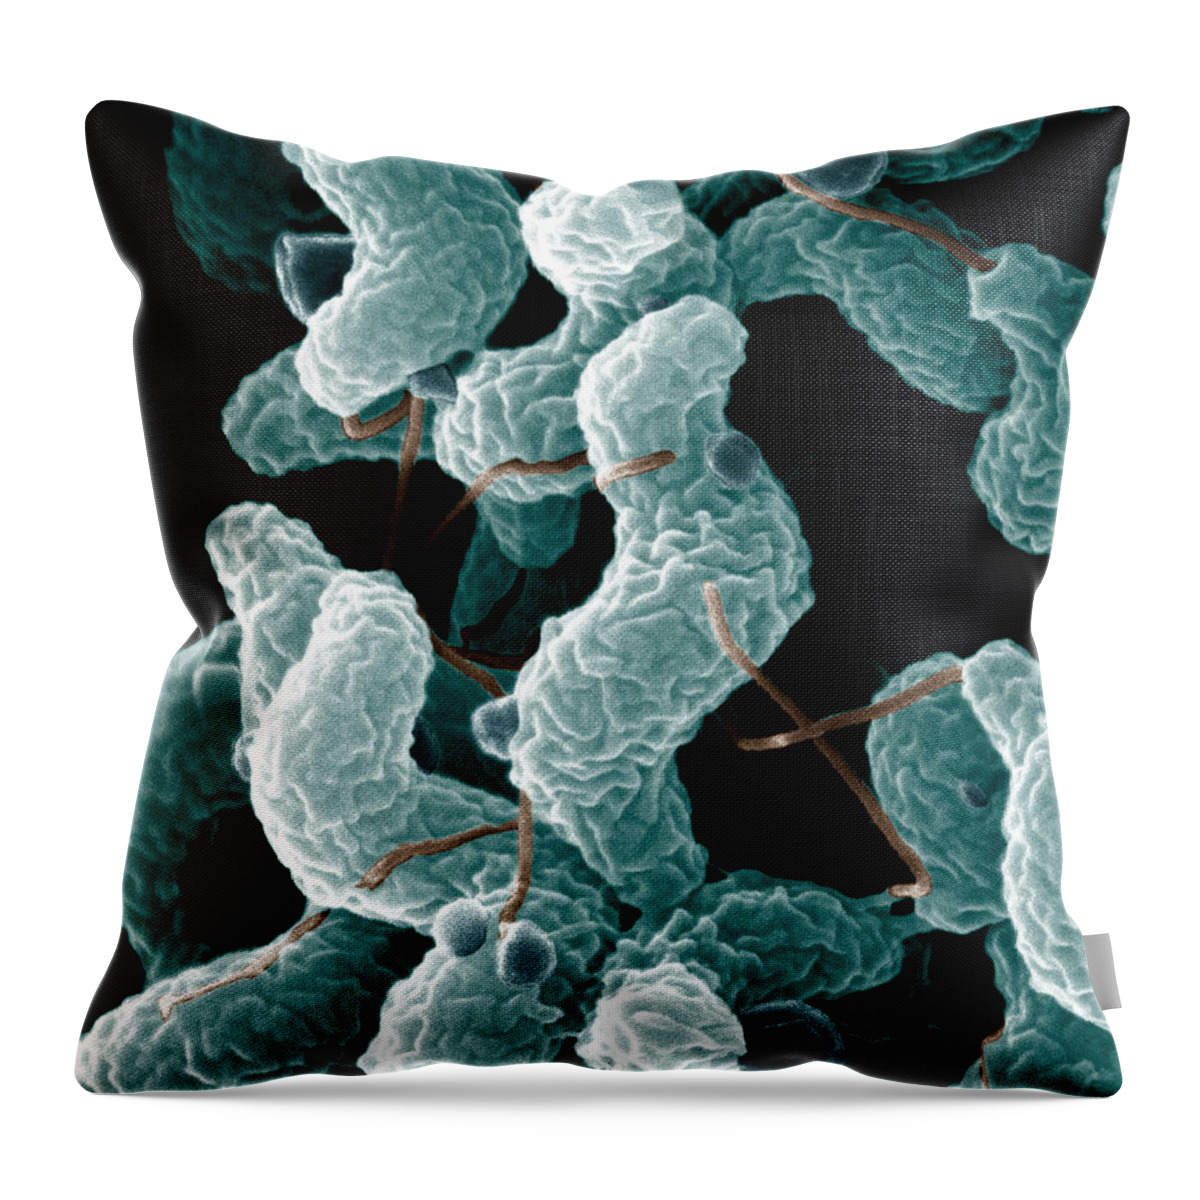 Campylobacter Bacteria Throw Pillow featuring the photograph Campylobacter Bacteria by Science Source